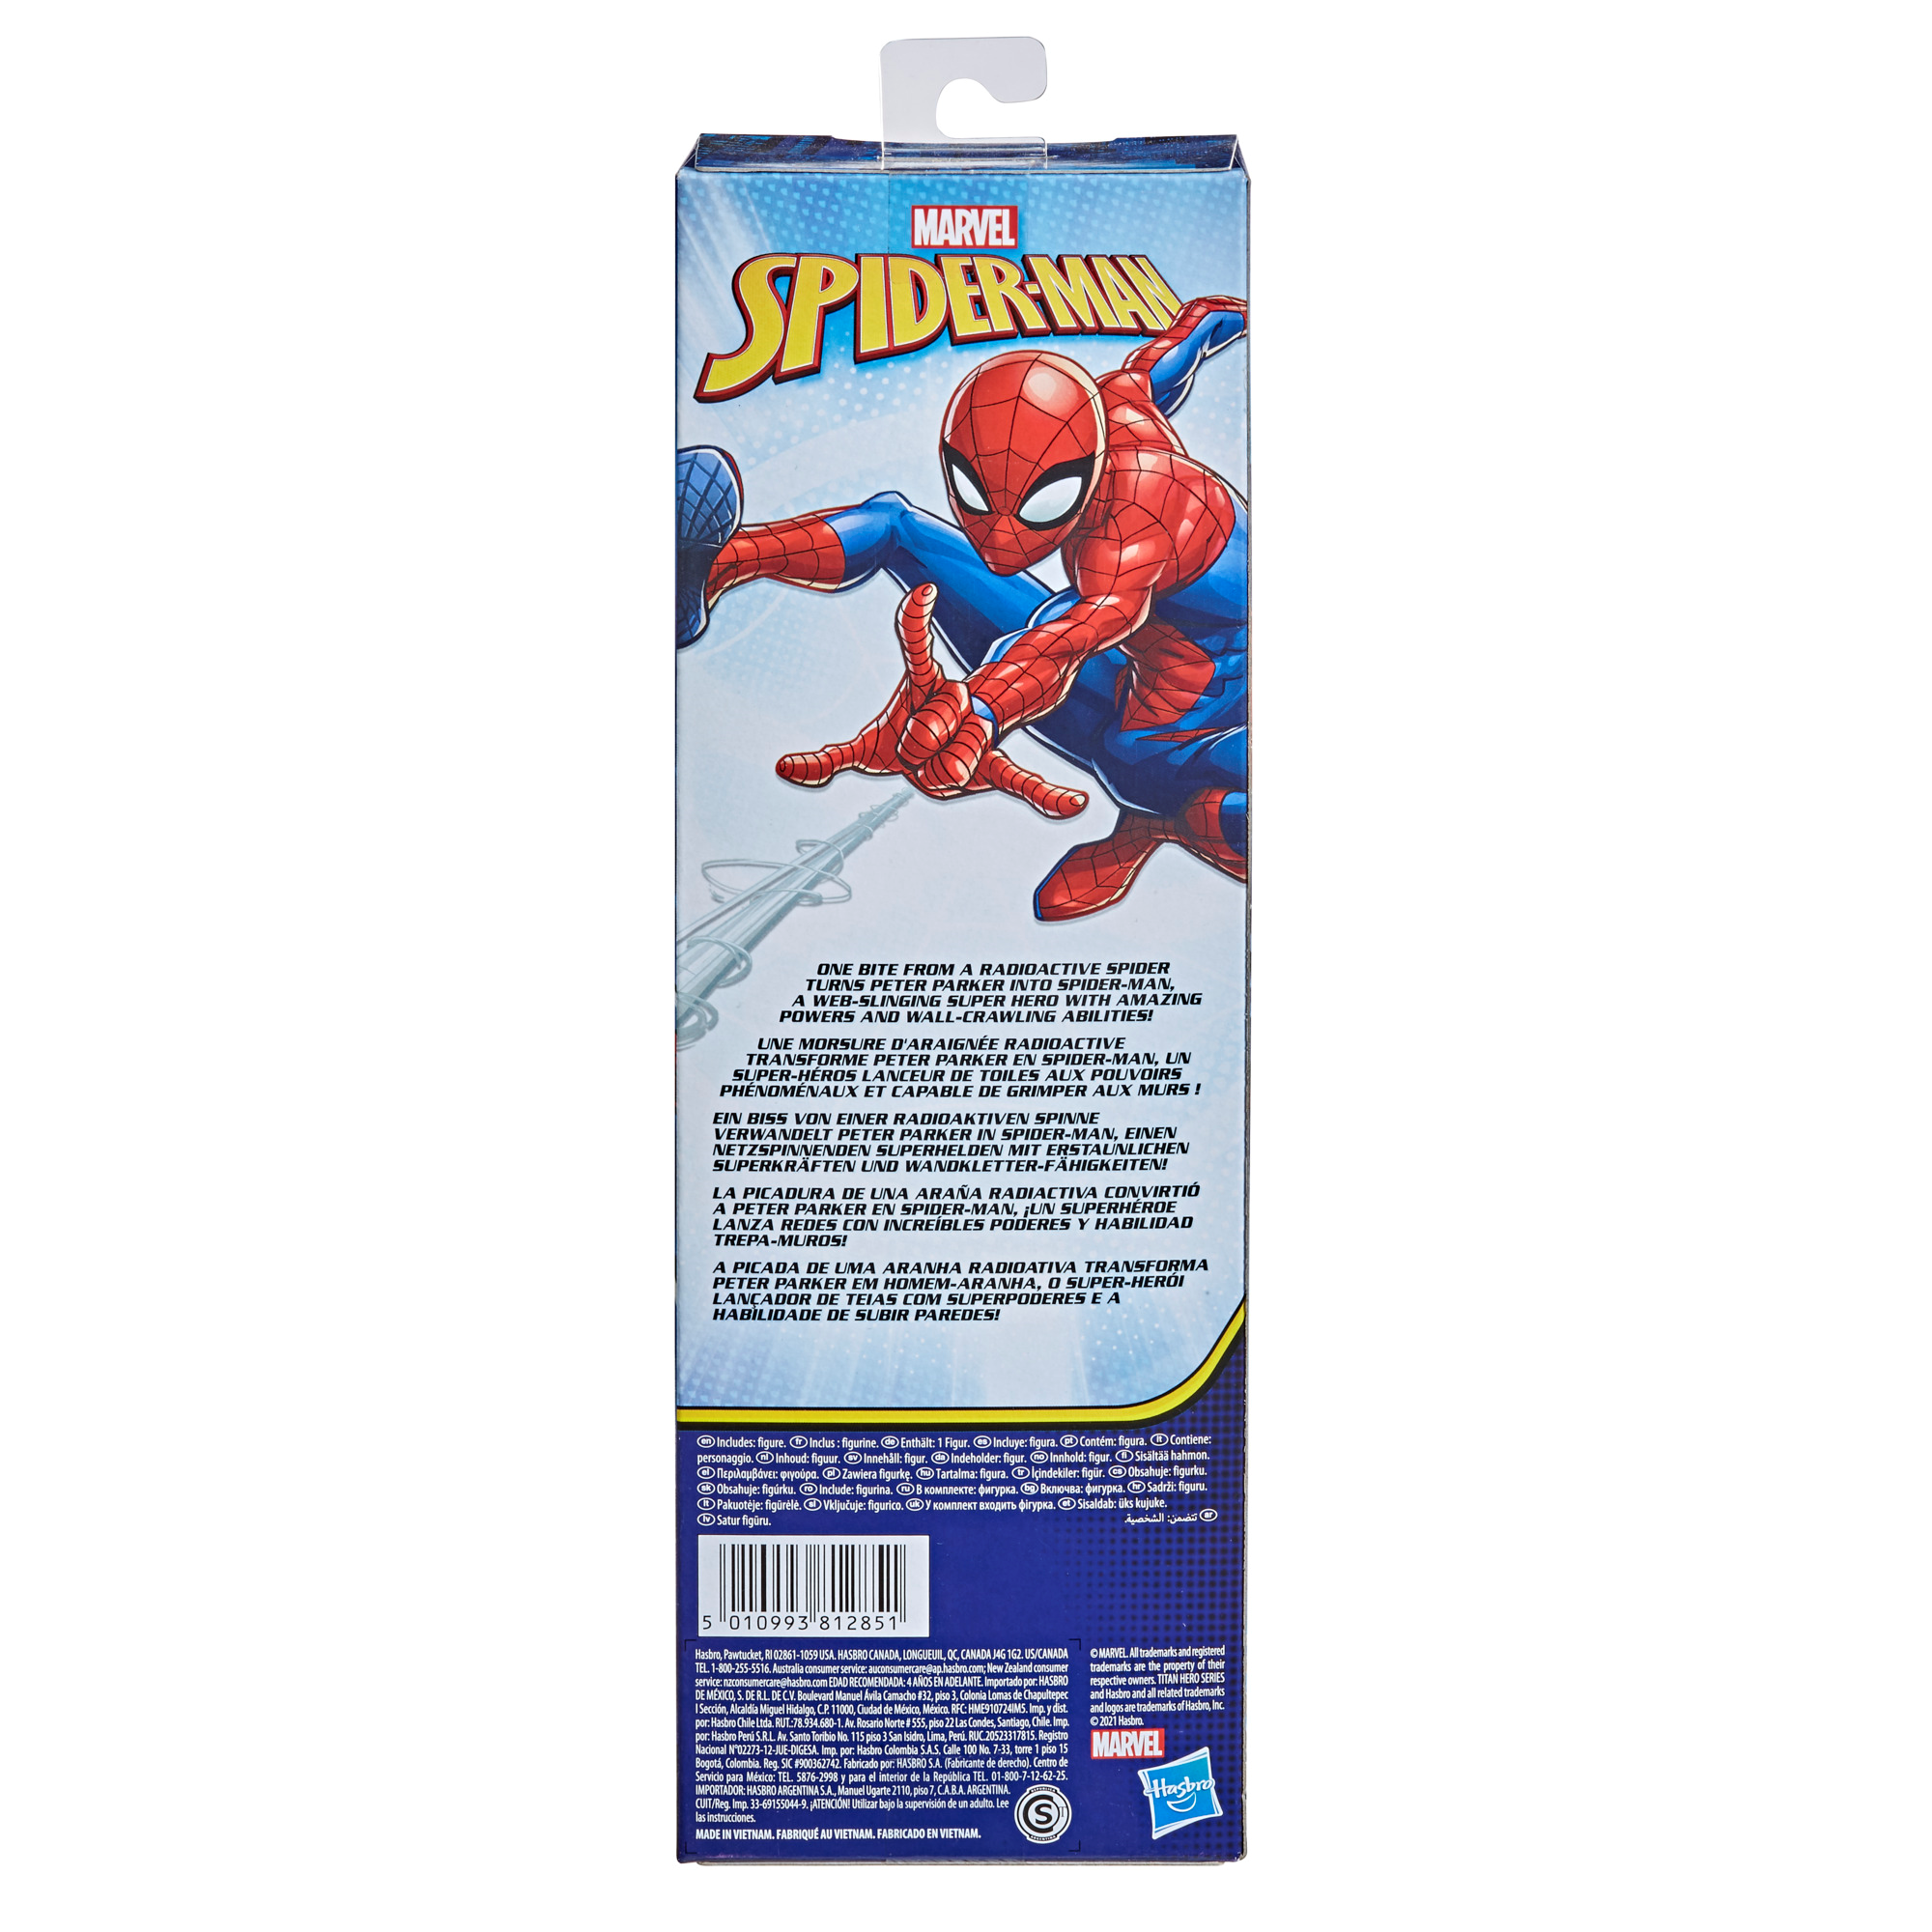 Hasbro spider-man - spider-man titan hero series, action figure da 30 cm - Spiderman